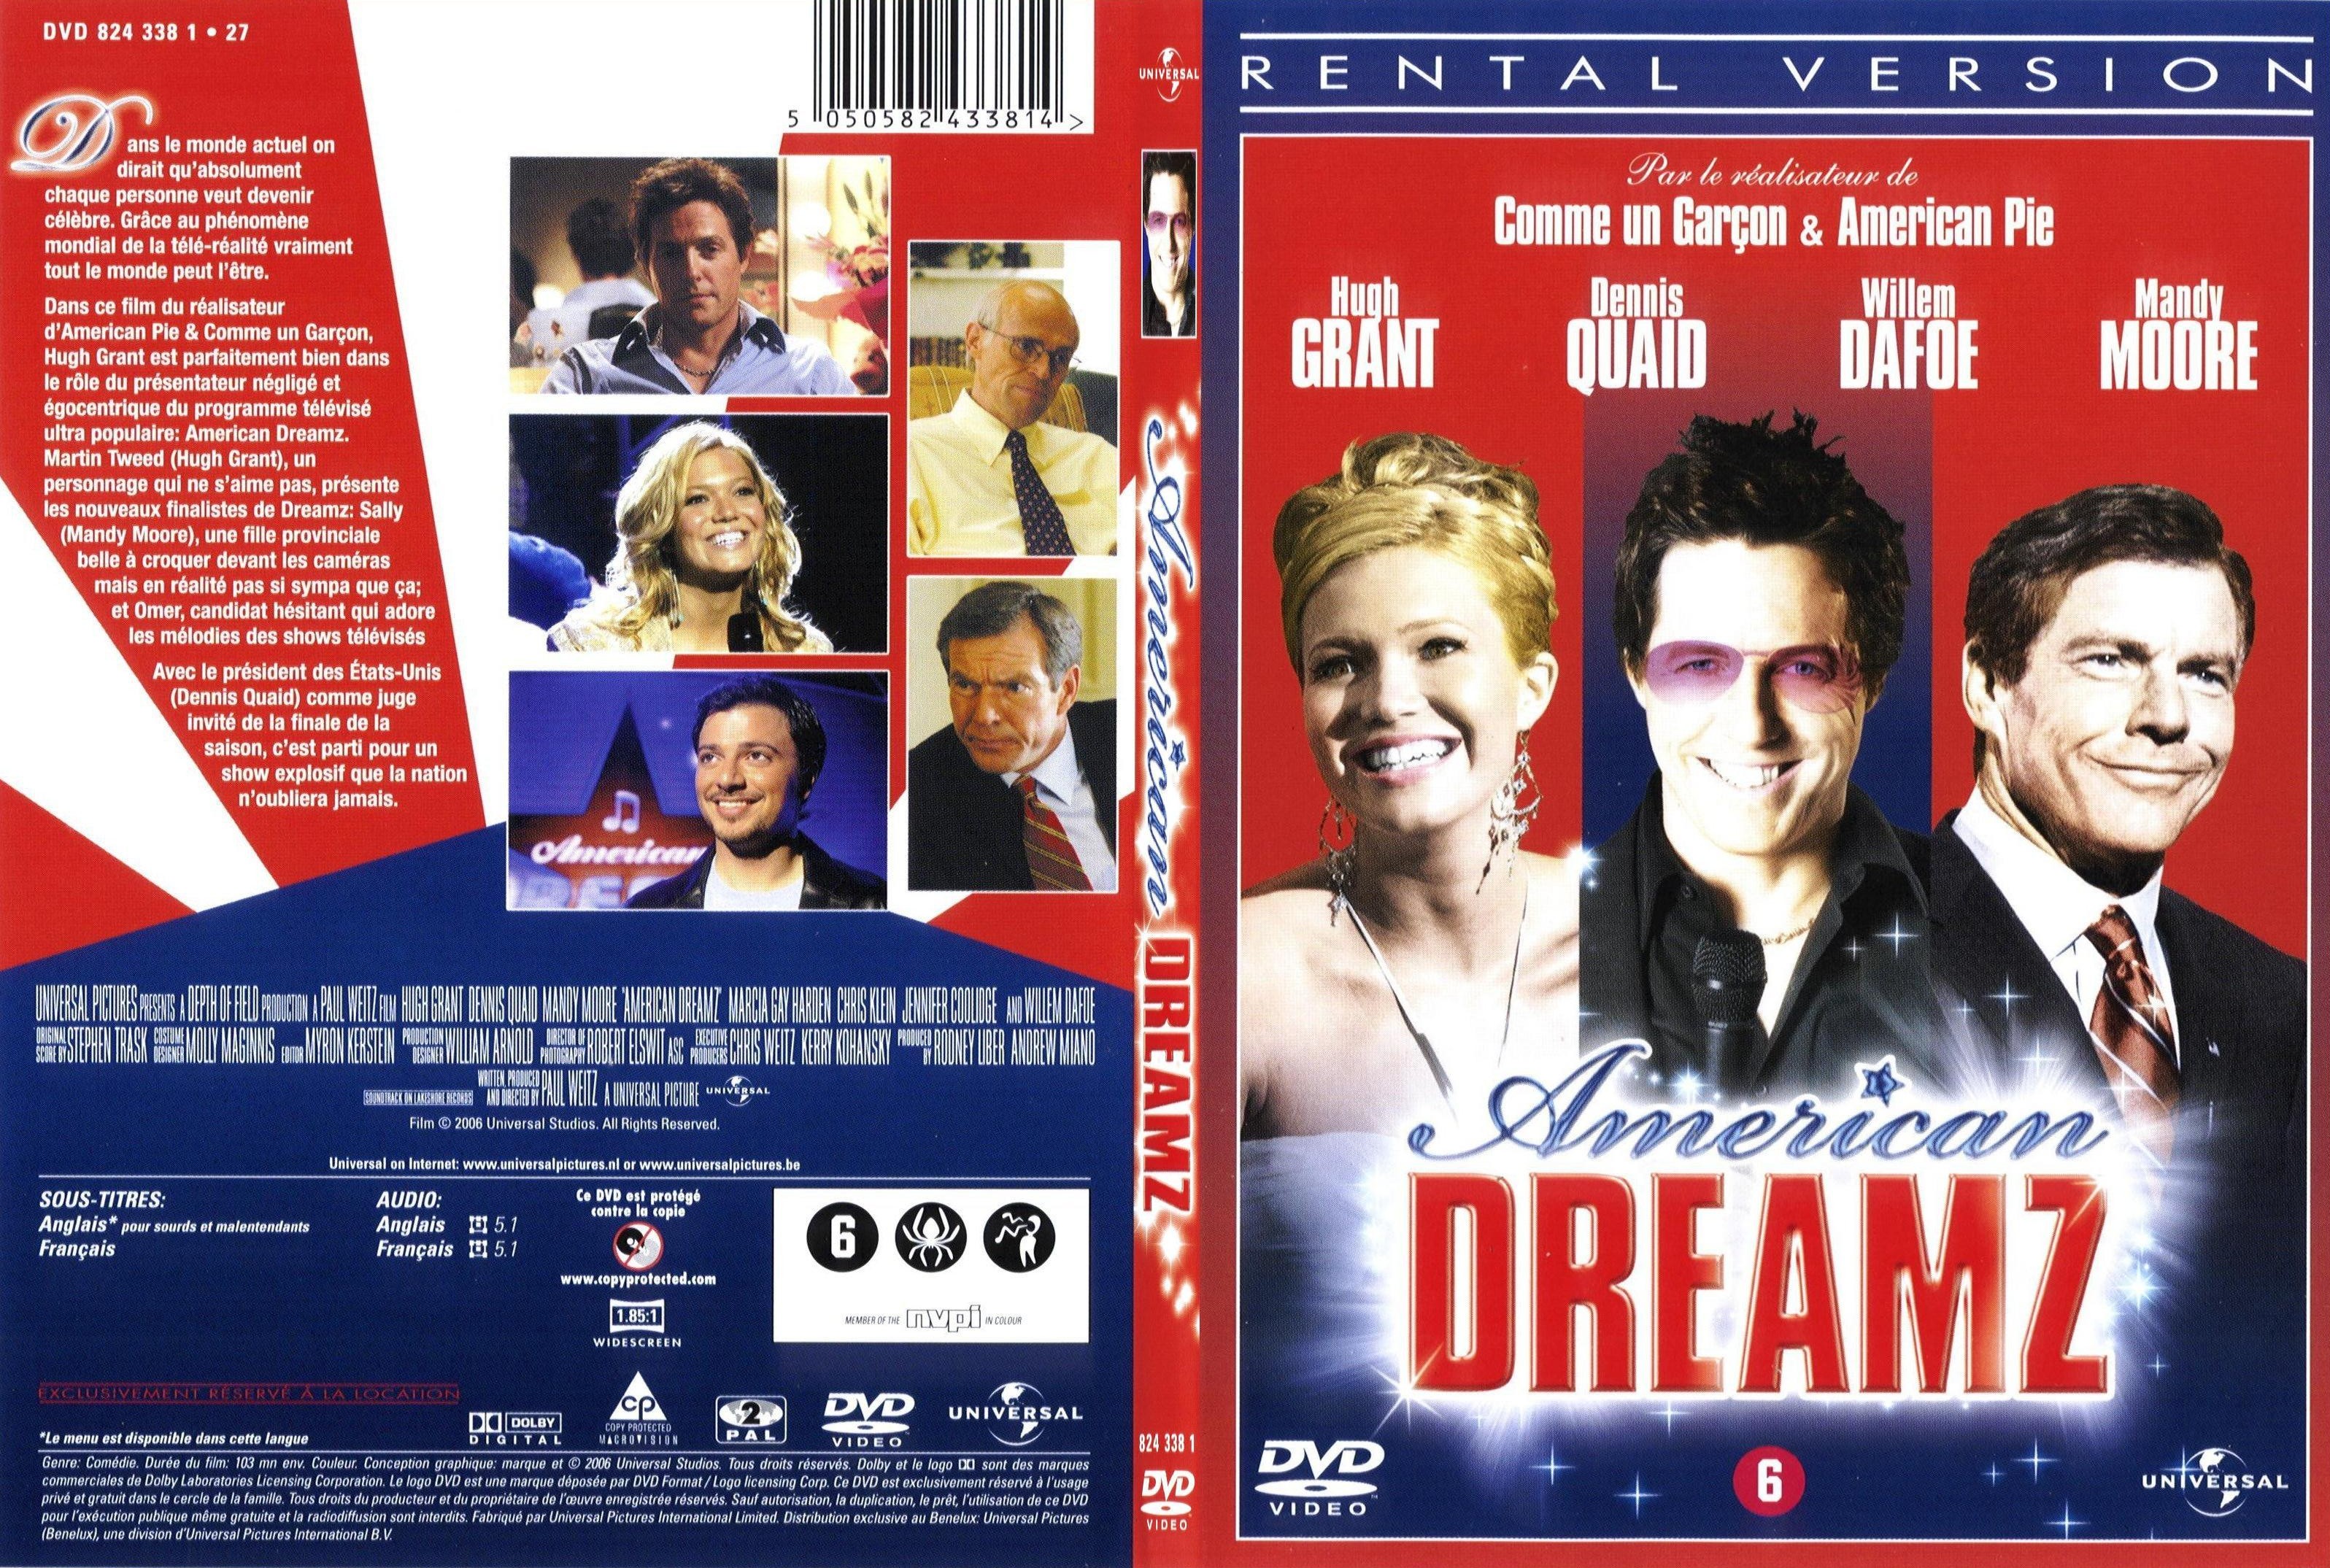 Jaquette DVD American Dreamz - SLIM